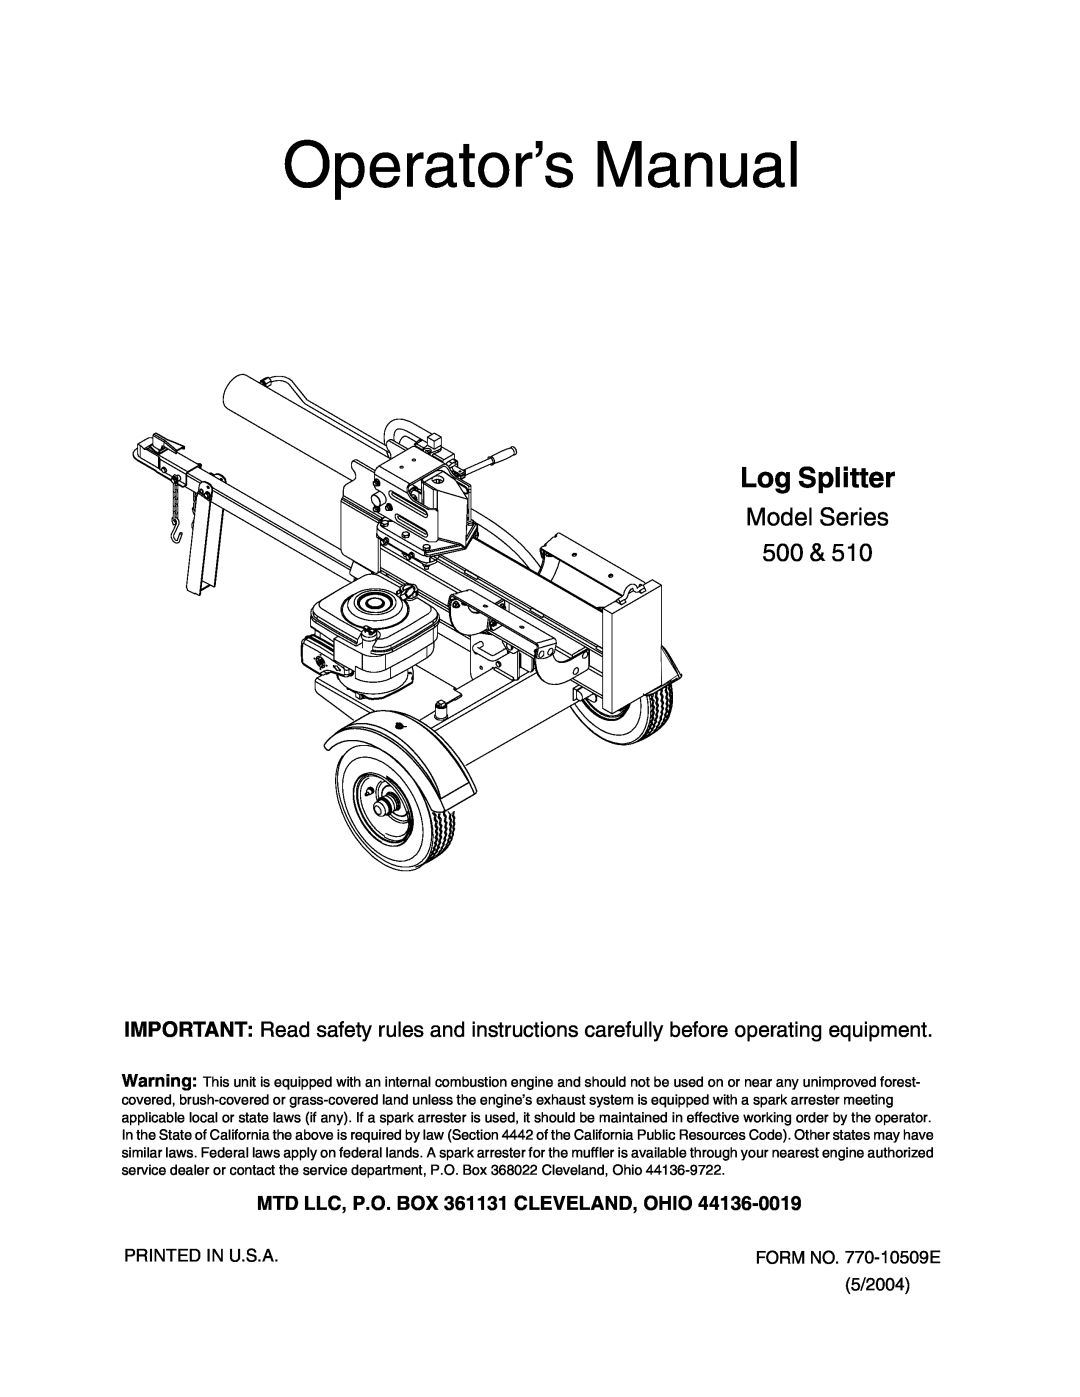 MTD 500, 510 manual Operator’s Manual, Log Splitter, Model Series 500, MTD LLC, P.O. BOX 361131 CLEVELAND, OHIO 